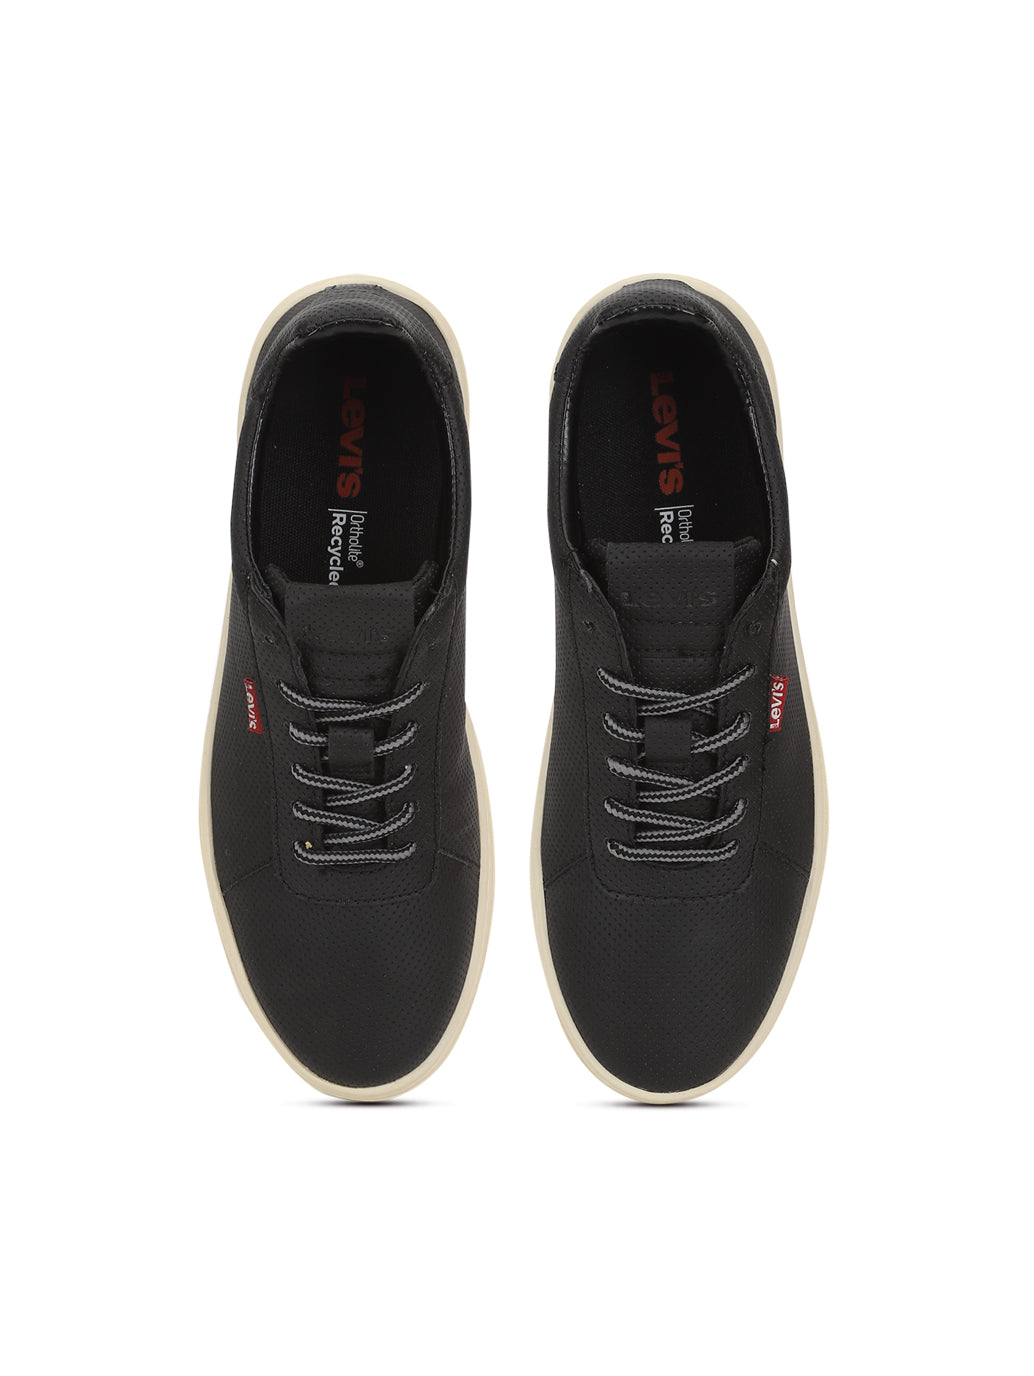 Men's Wanderer Black Casual Sneakers